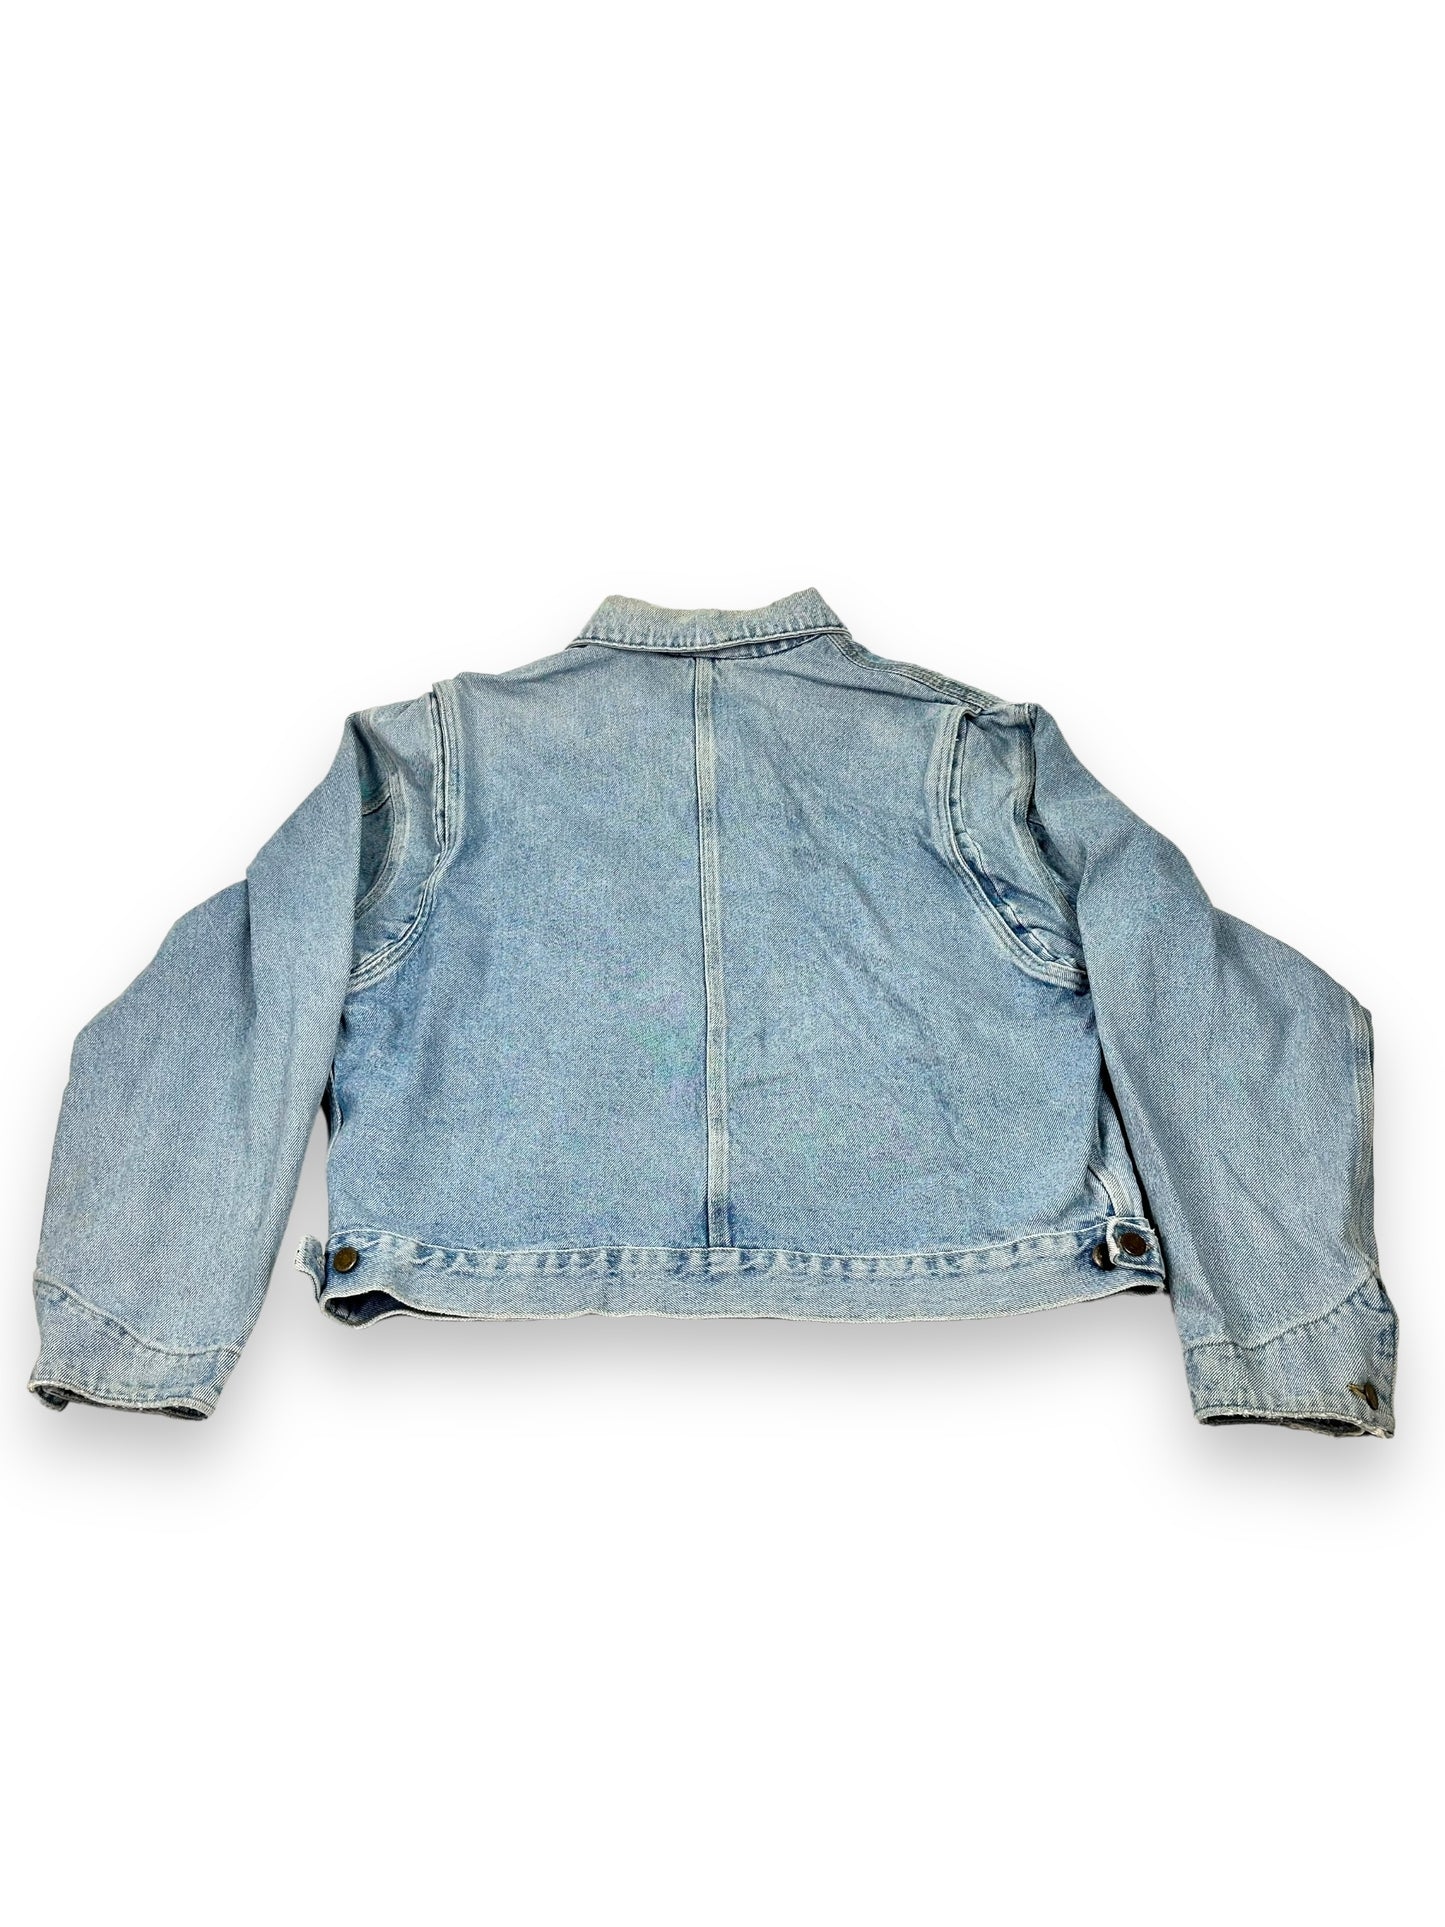 Vintage Carhartt Denim Jacket